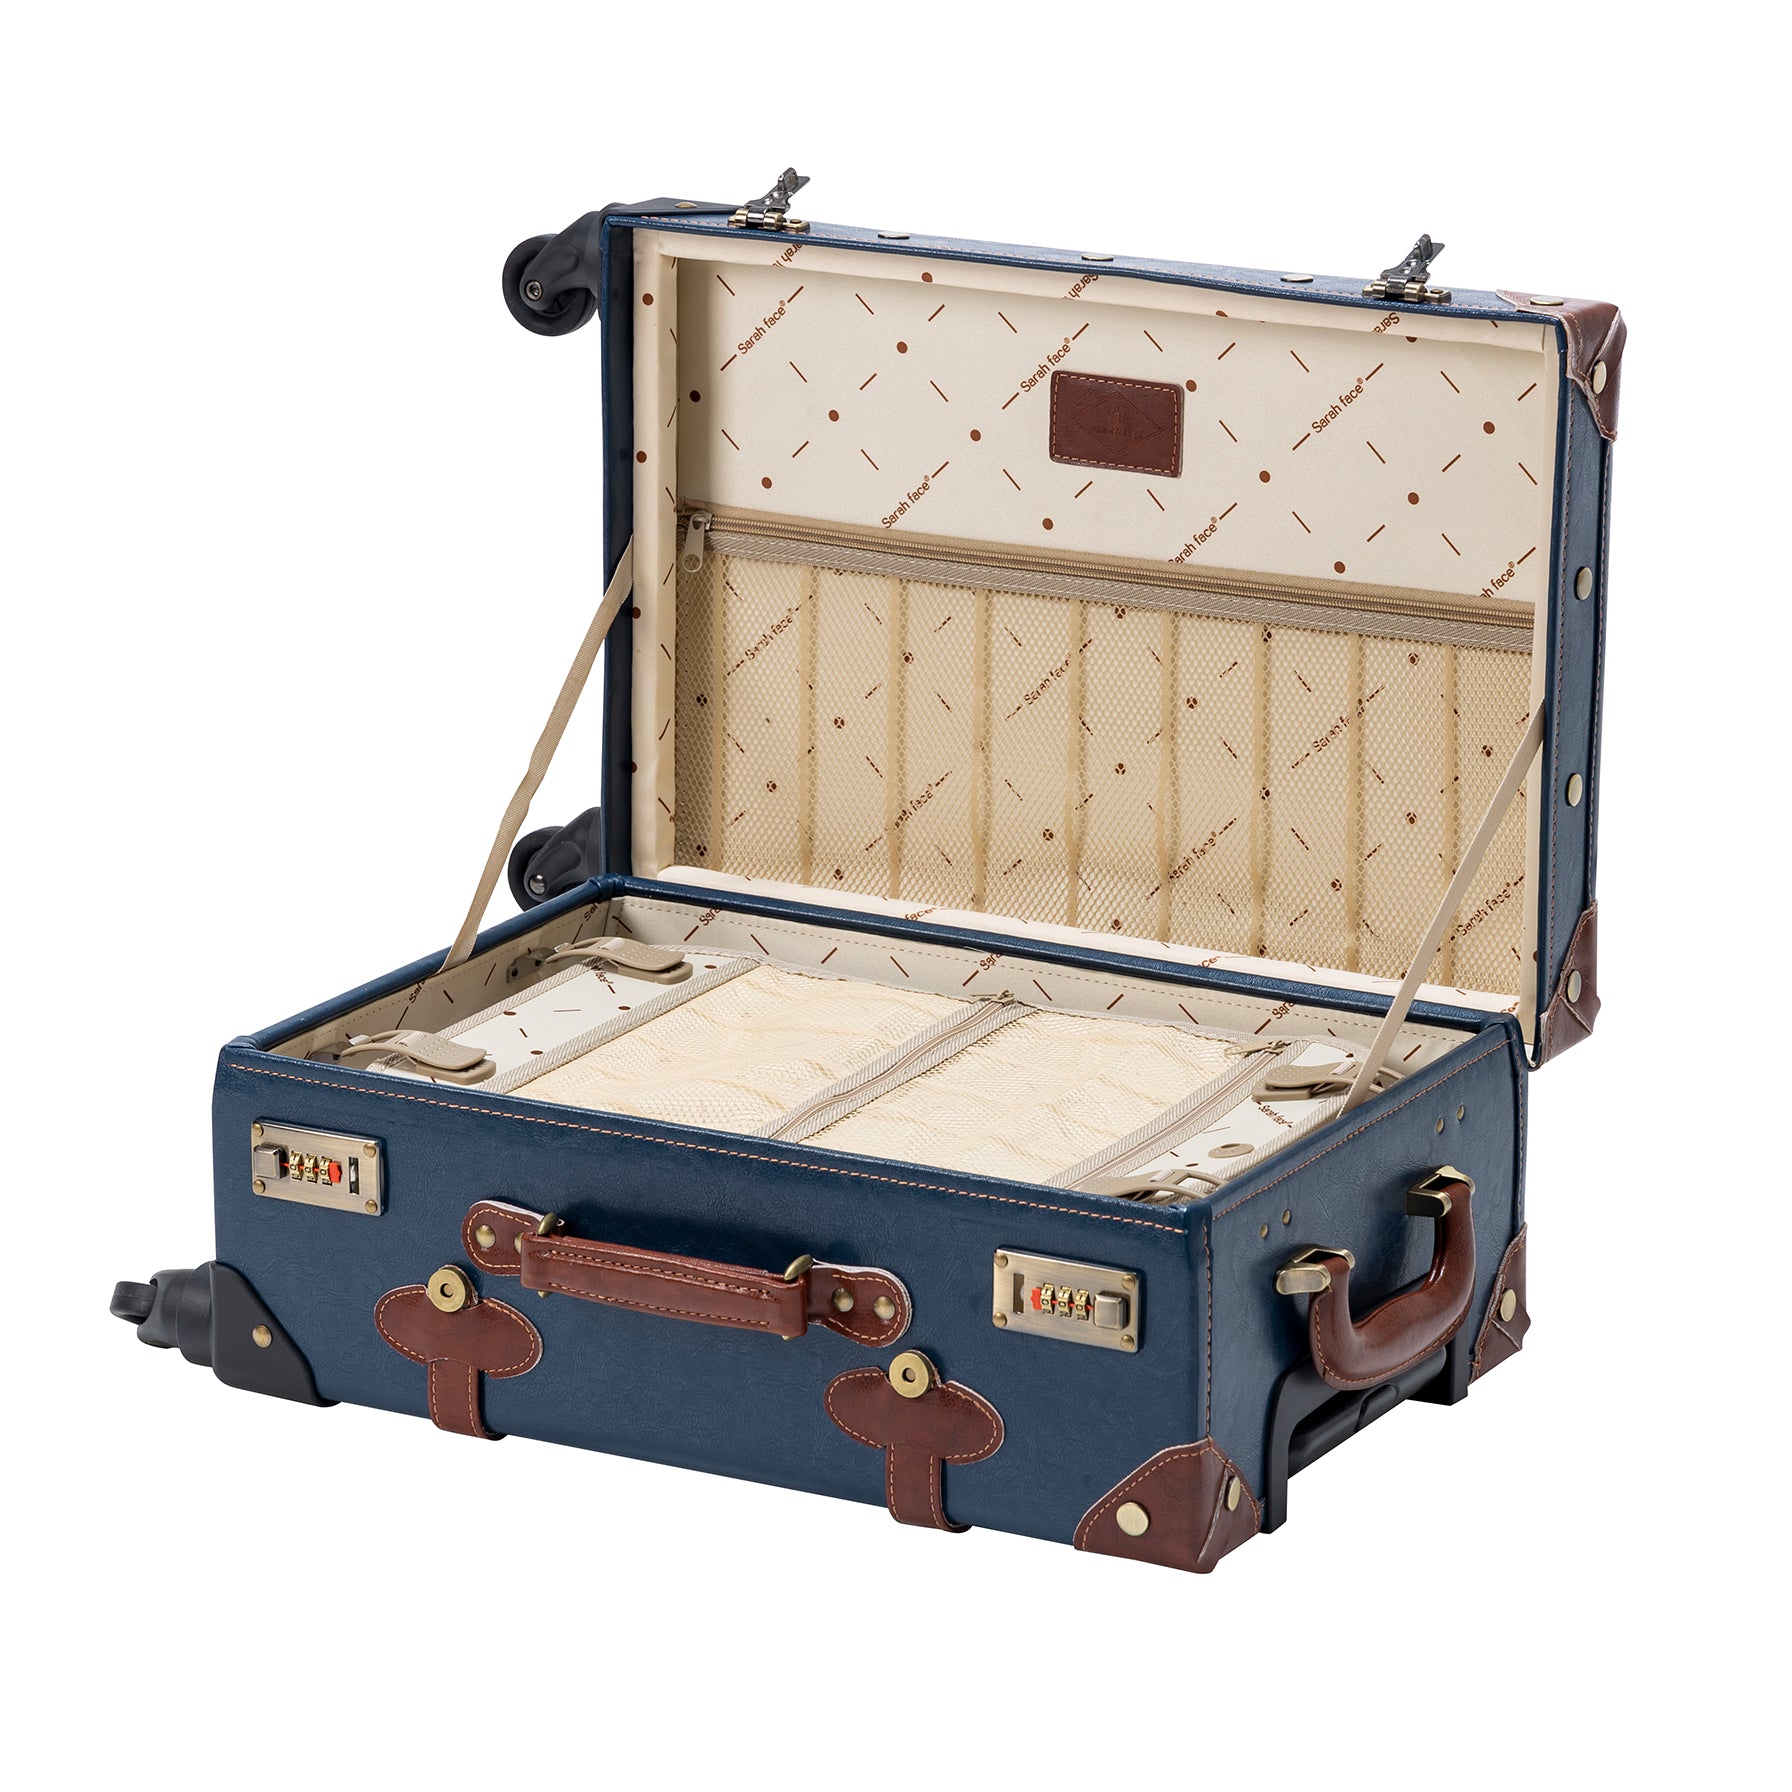 SarahFace 3 Pieces Luggage Sets - Navy Blue's